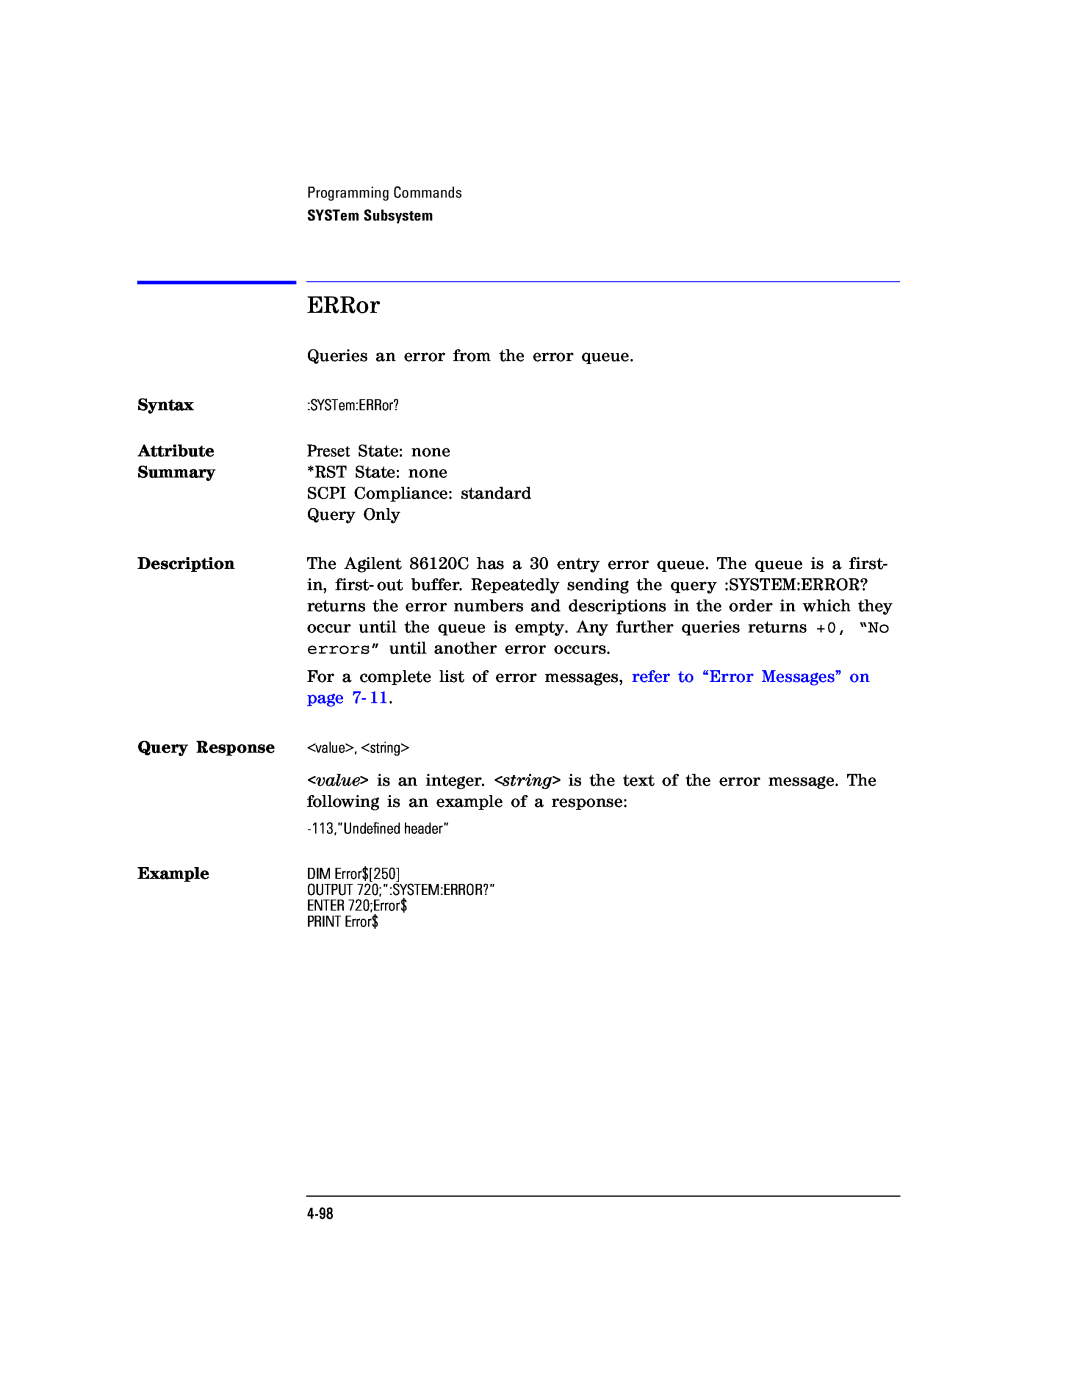 Agilent Technologies Agilent 86120C manual ERRor, Syntax, Attribute, Summary, Description, page 7, Query Response, Example 